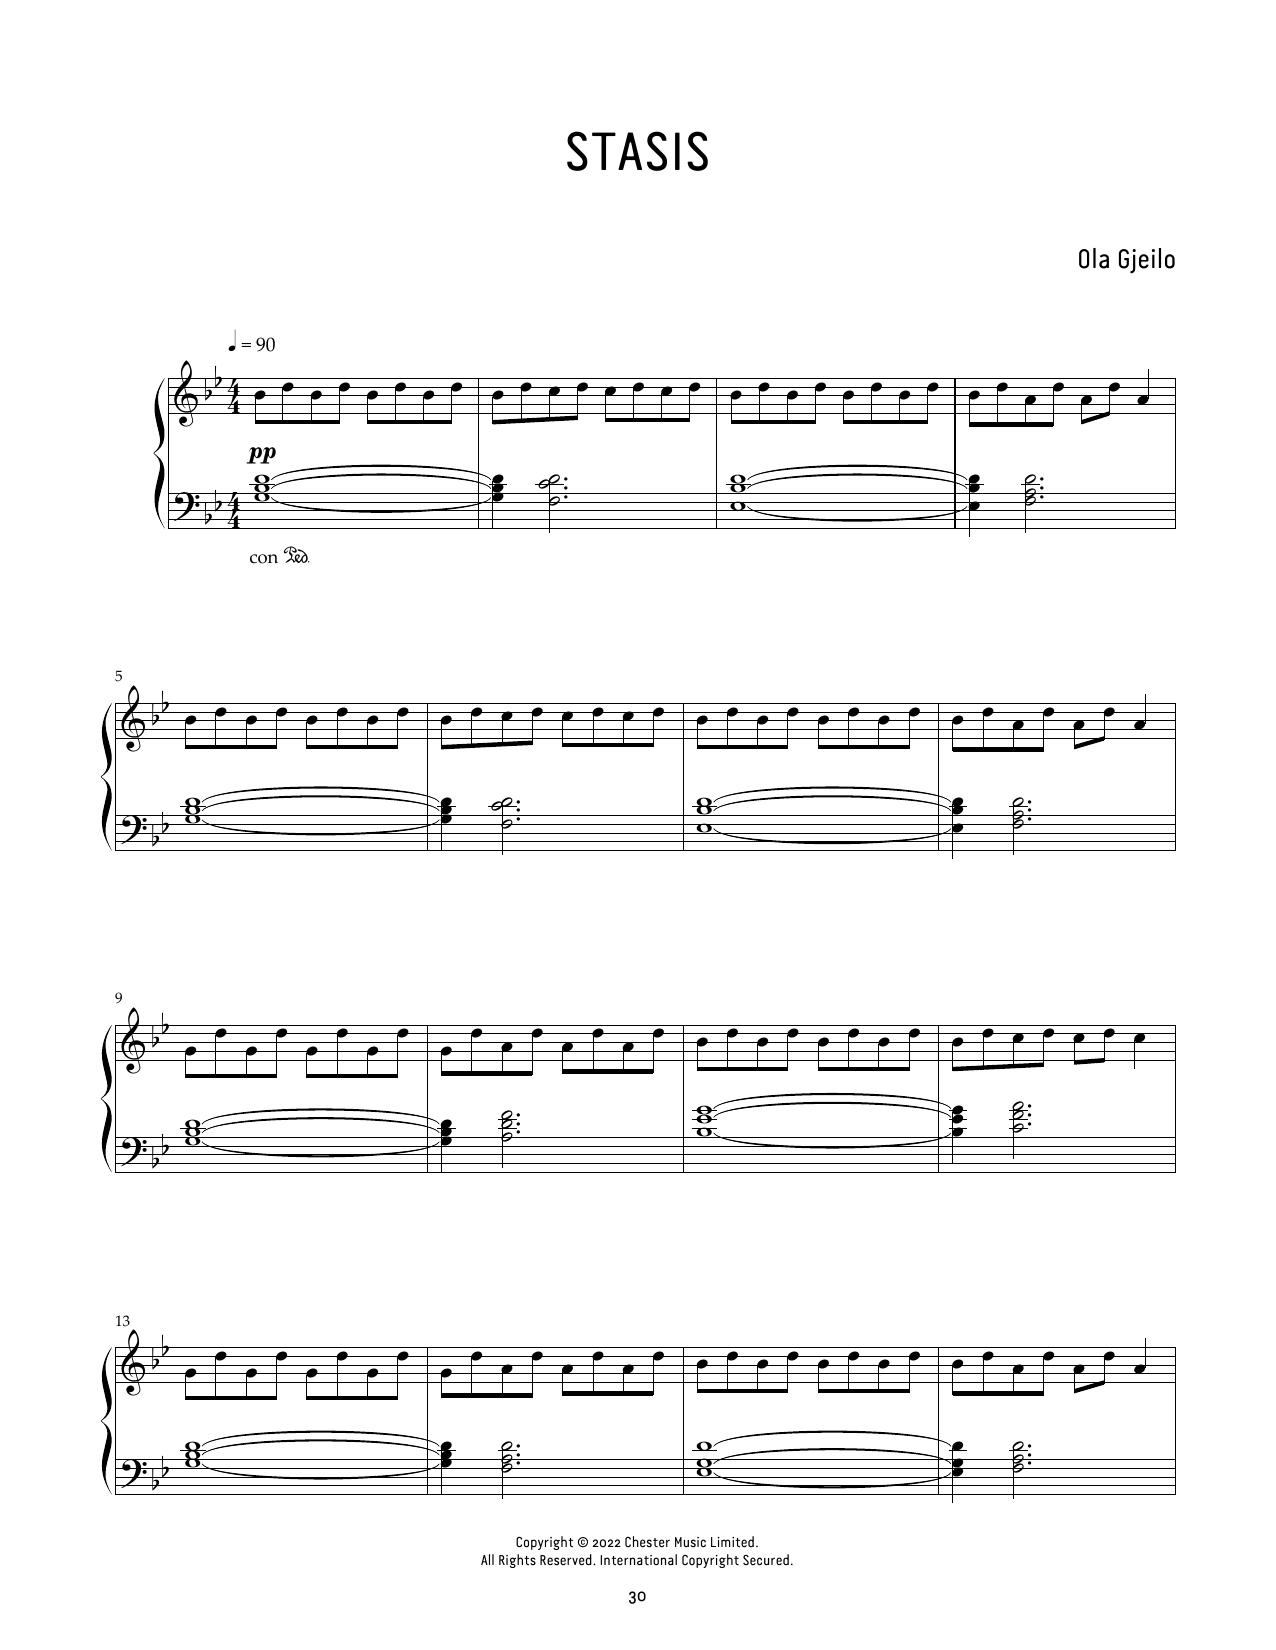 Ola Gjeilo Stasis Sheet Music Notes & Chords for Piano Solo - Download or Print PDF